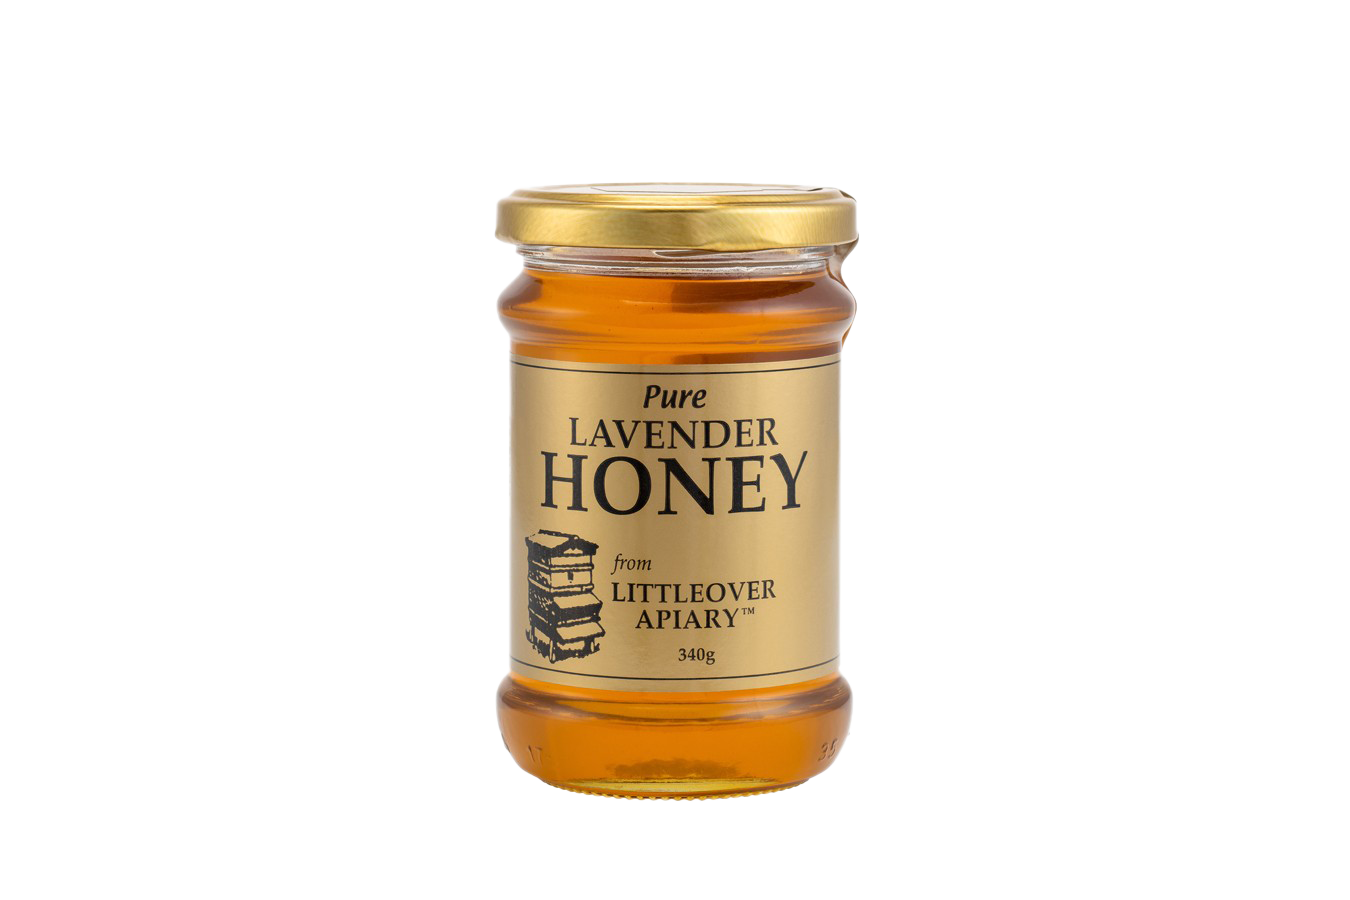 Honey Background PNG Image